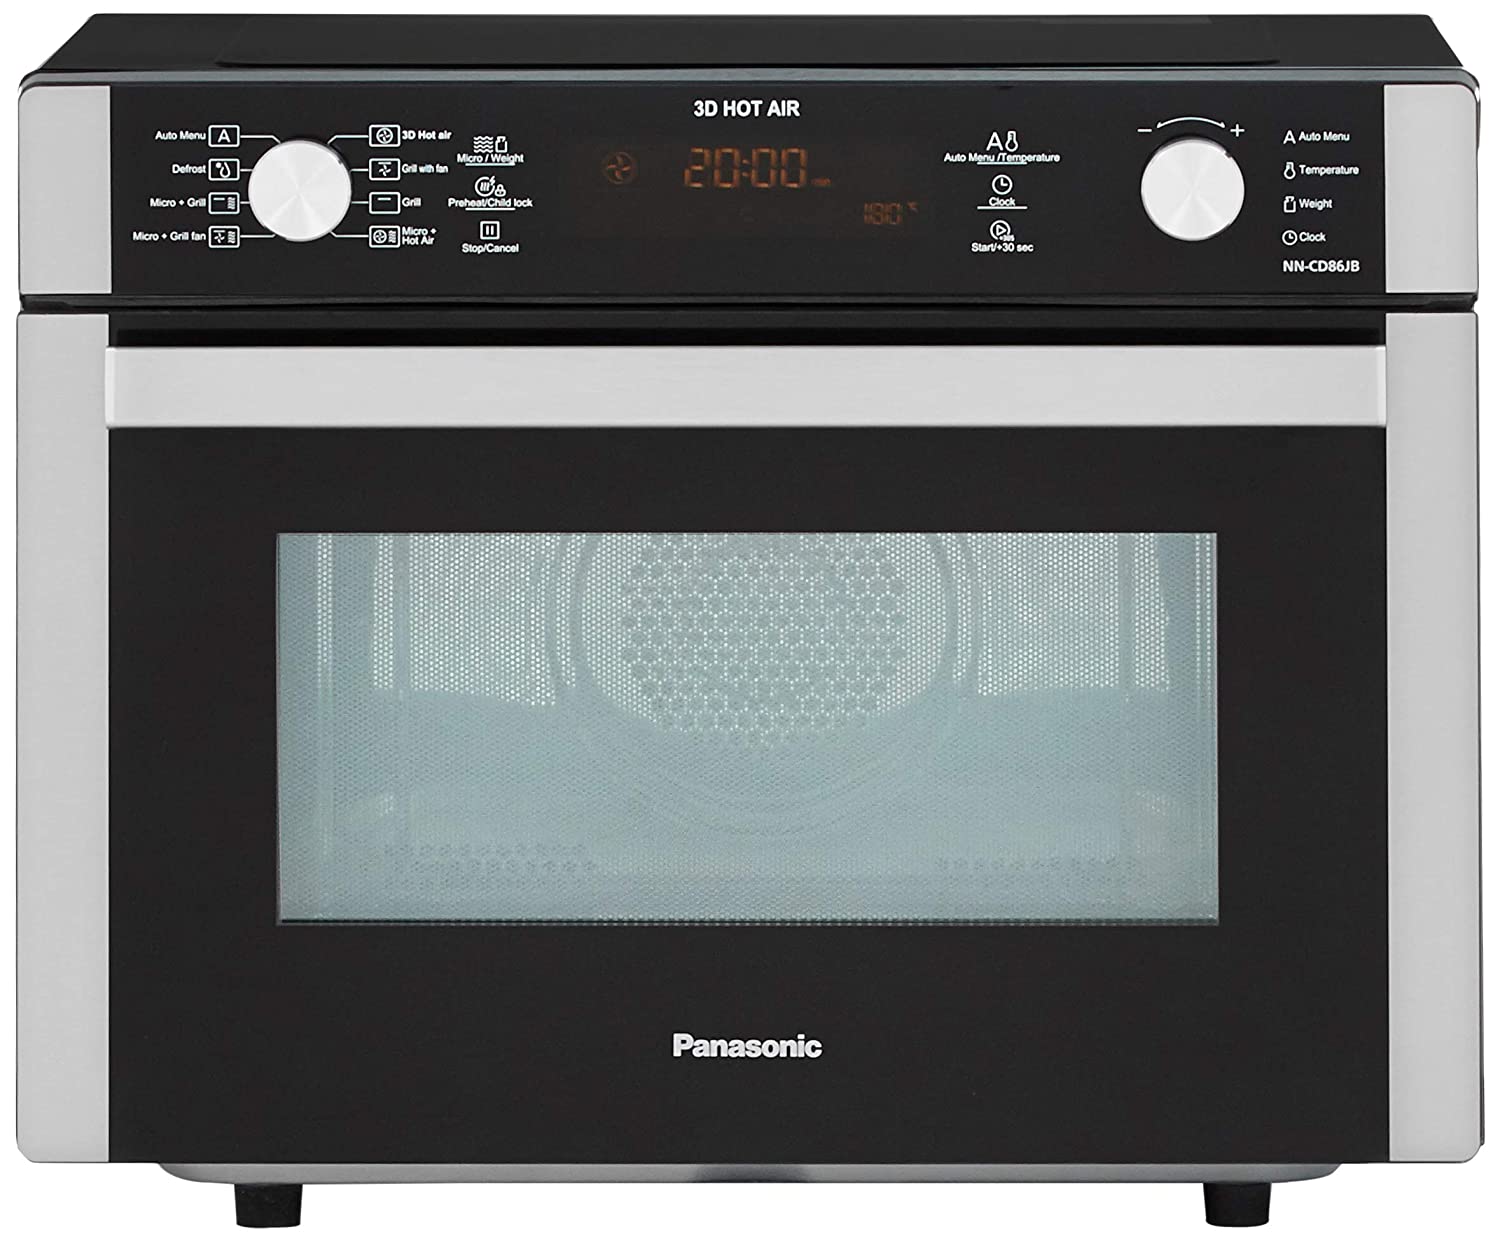 Panasonic 34 L Convection Microwave Oven Nn-cd86jbfdg Black